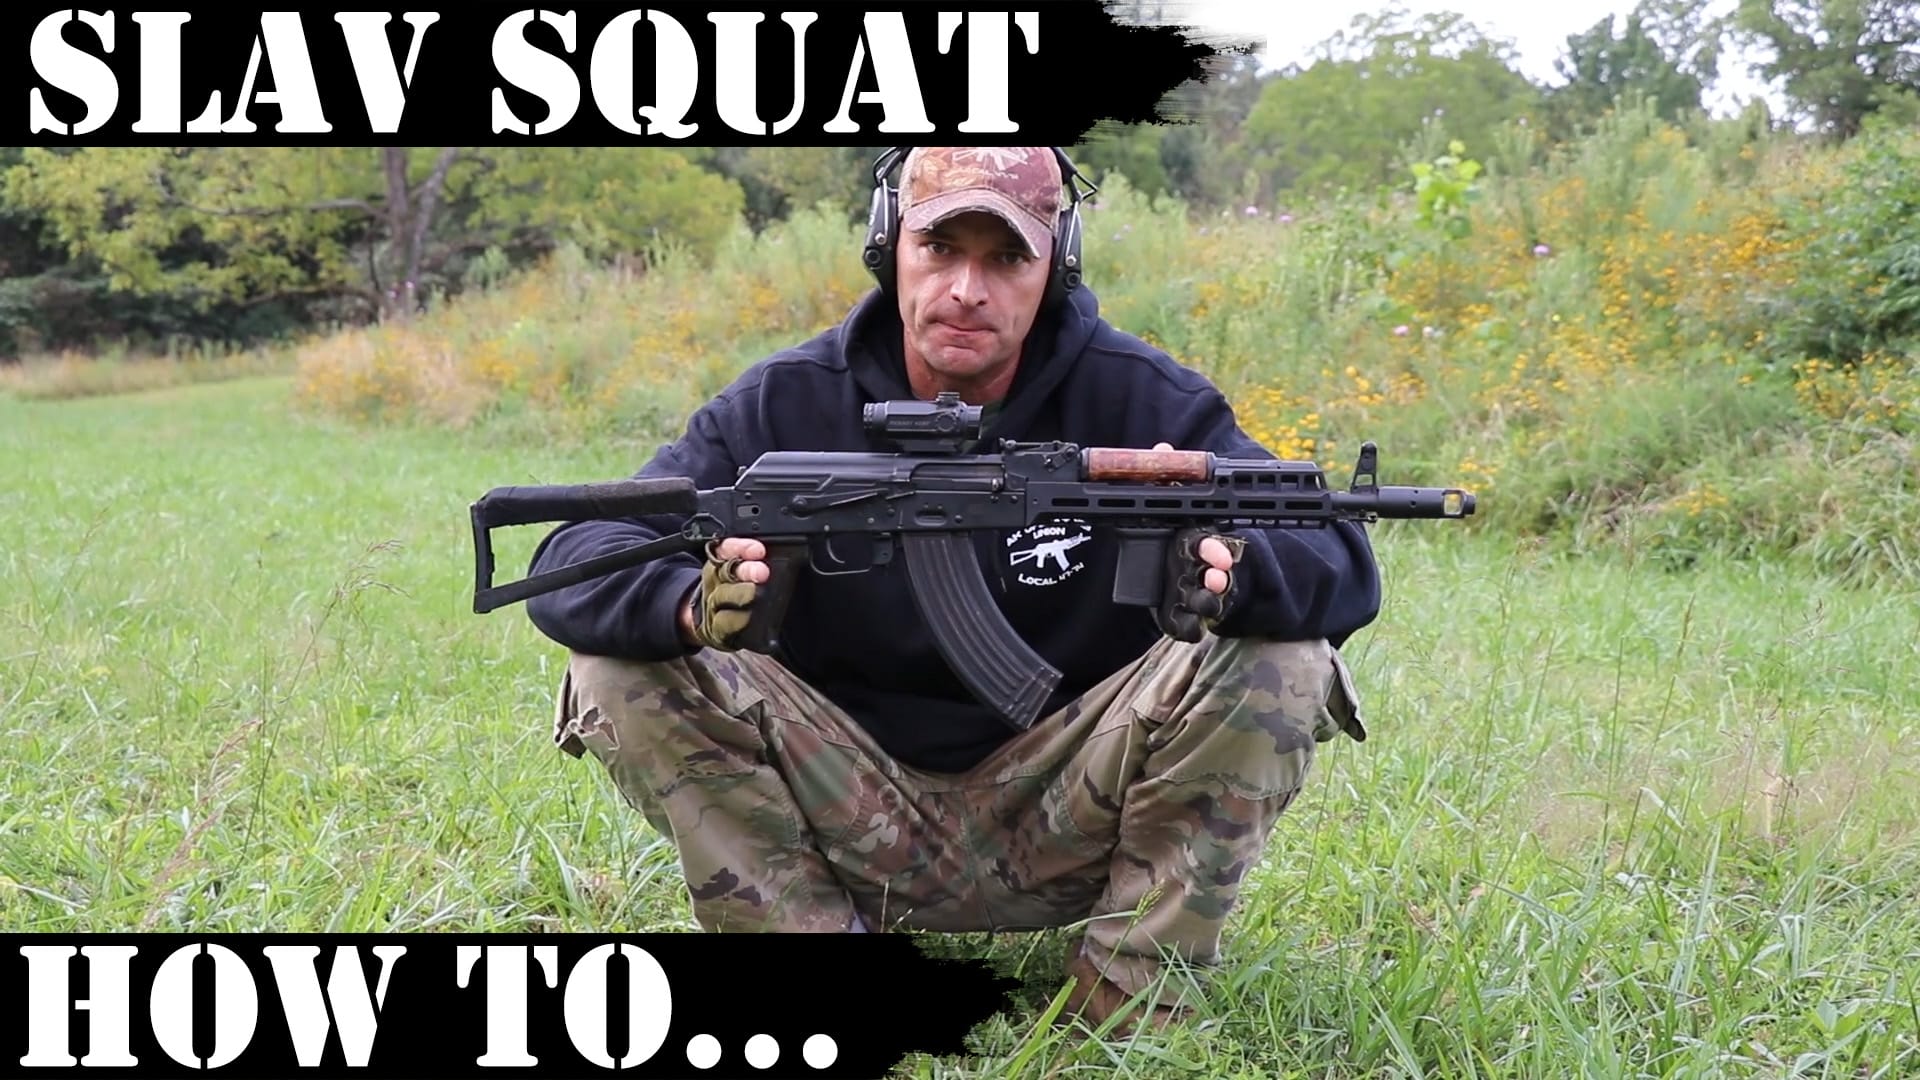 Slav Squat - how to shoot from squat! - AK Operators Union, Local 47-74